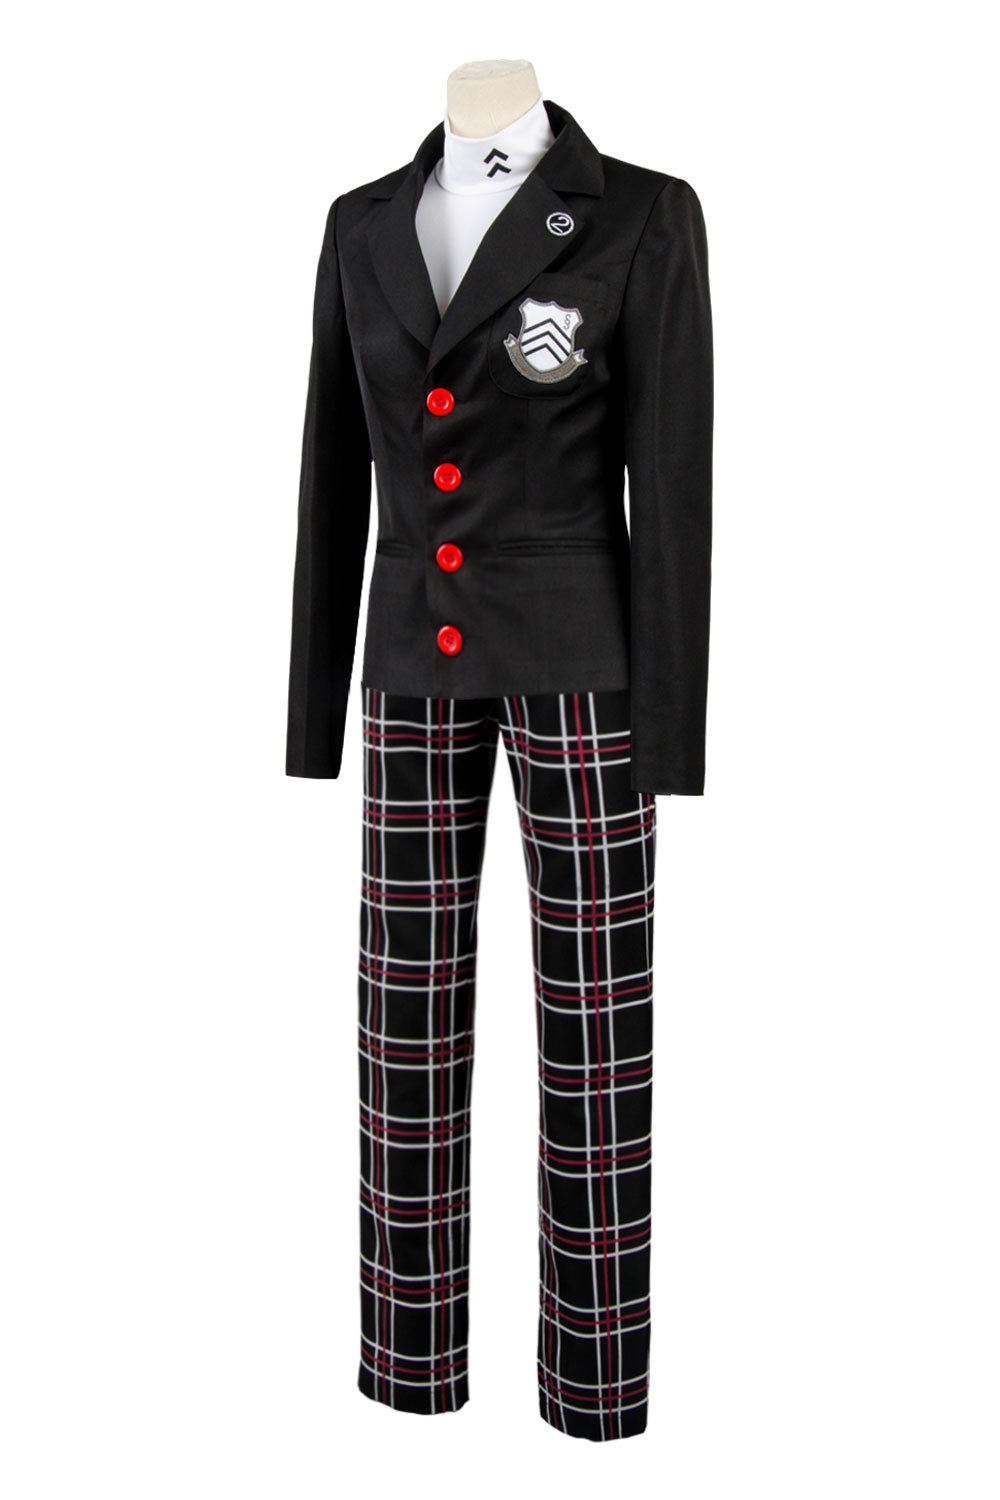 Persona 5 Protagonist Uniform Cosplay Costume